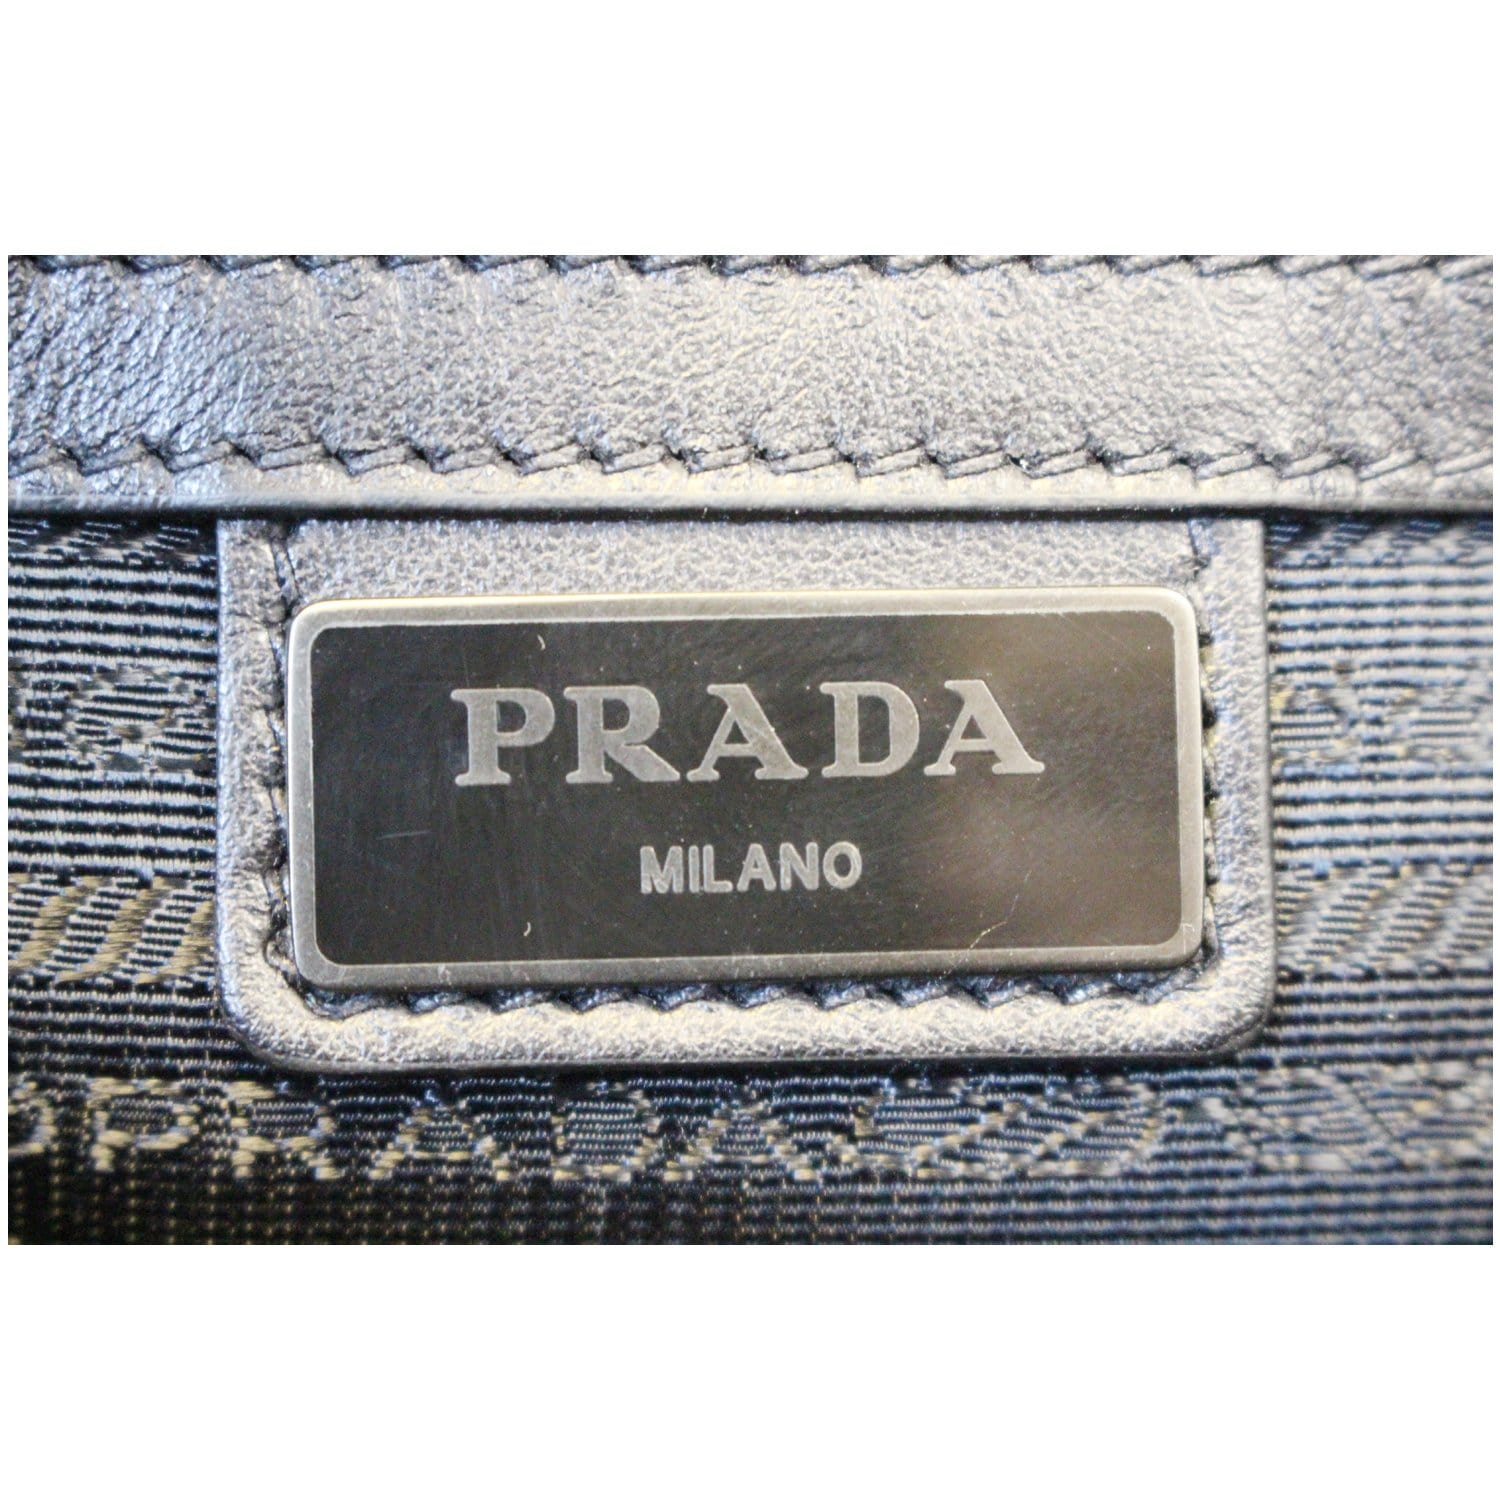 Shop Prada Laptop Bag online